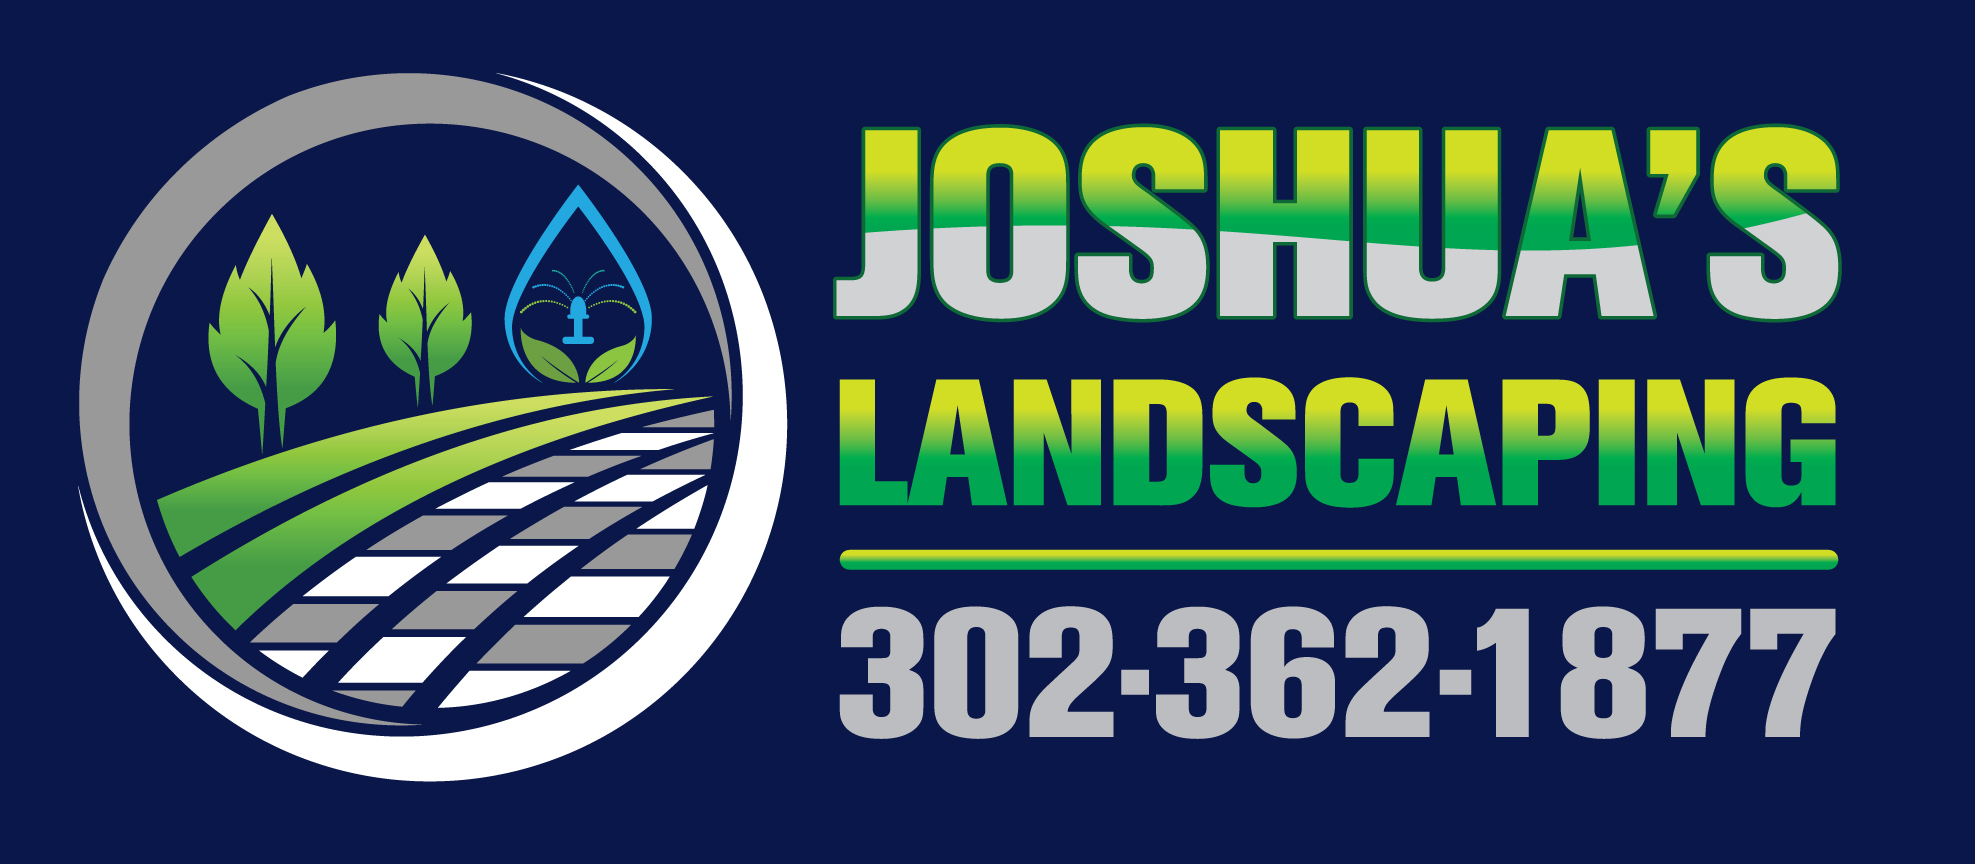 joshua's landscaping logo